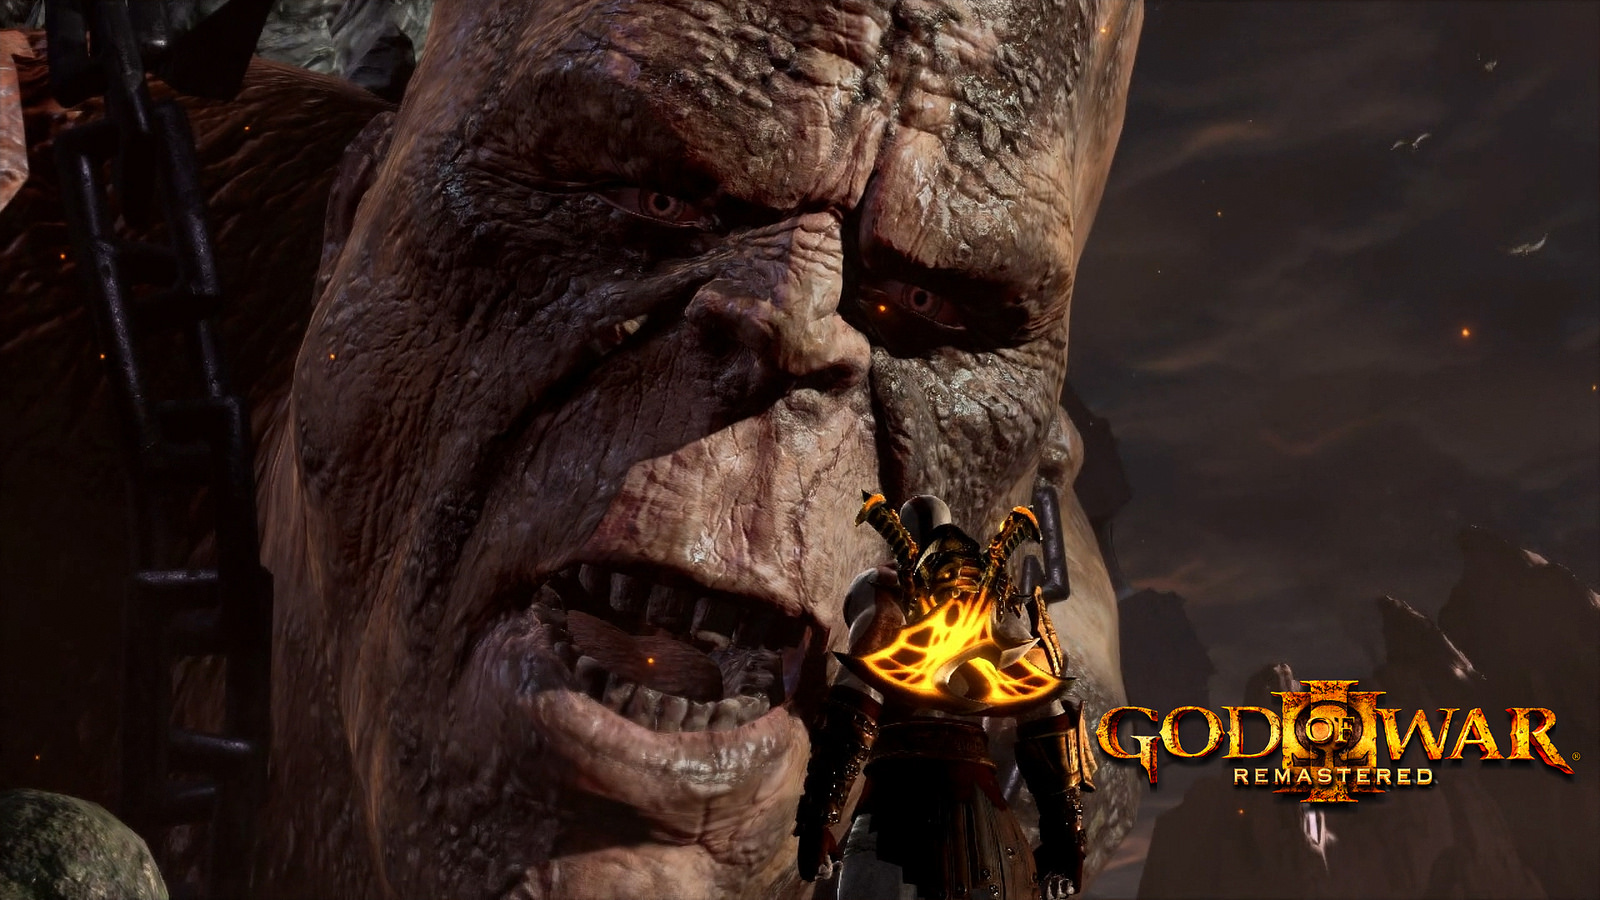 God of War 5